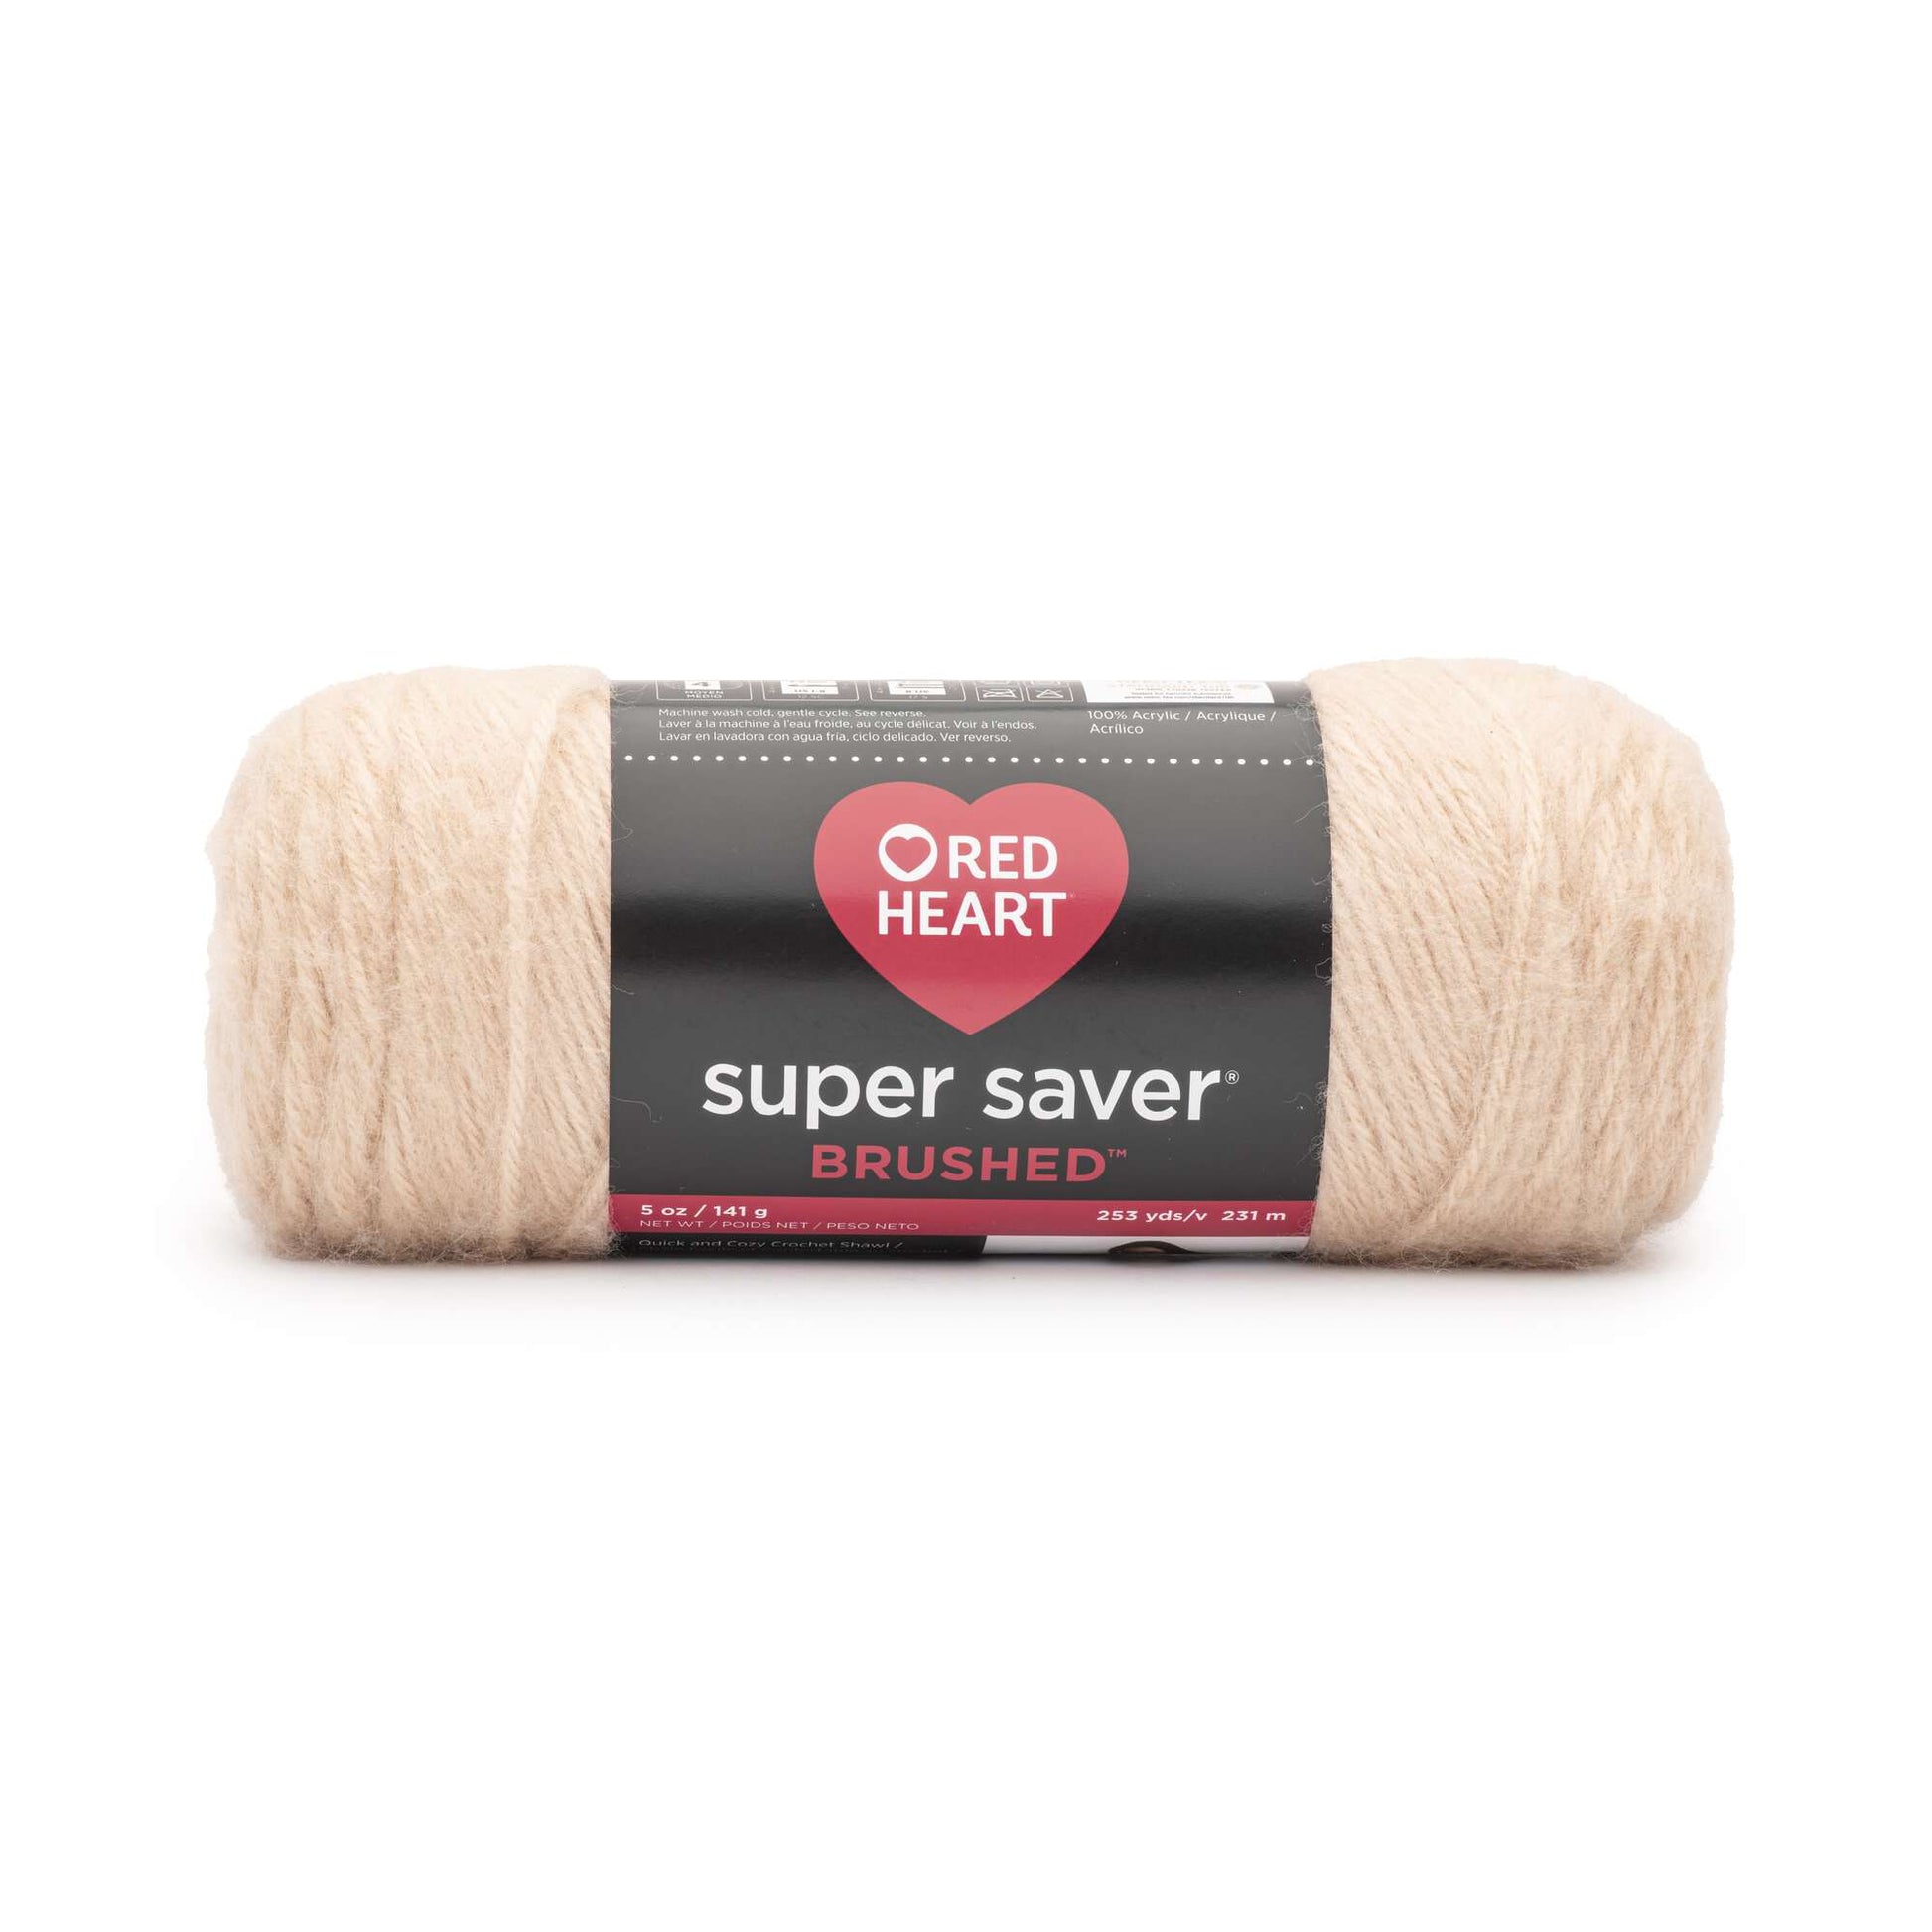 Red Heart Super Saver Jumbo Yarn, Soft White 2 Count (Pack of 1)